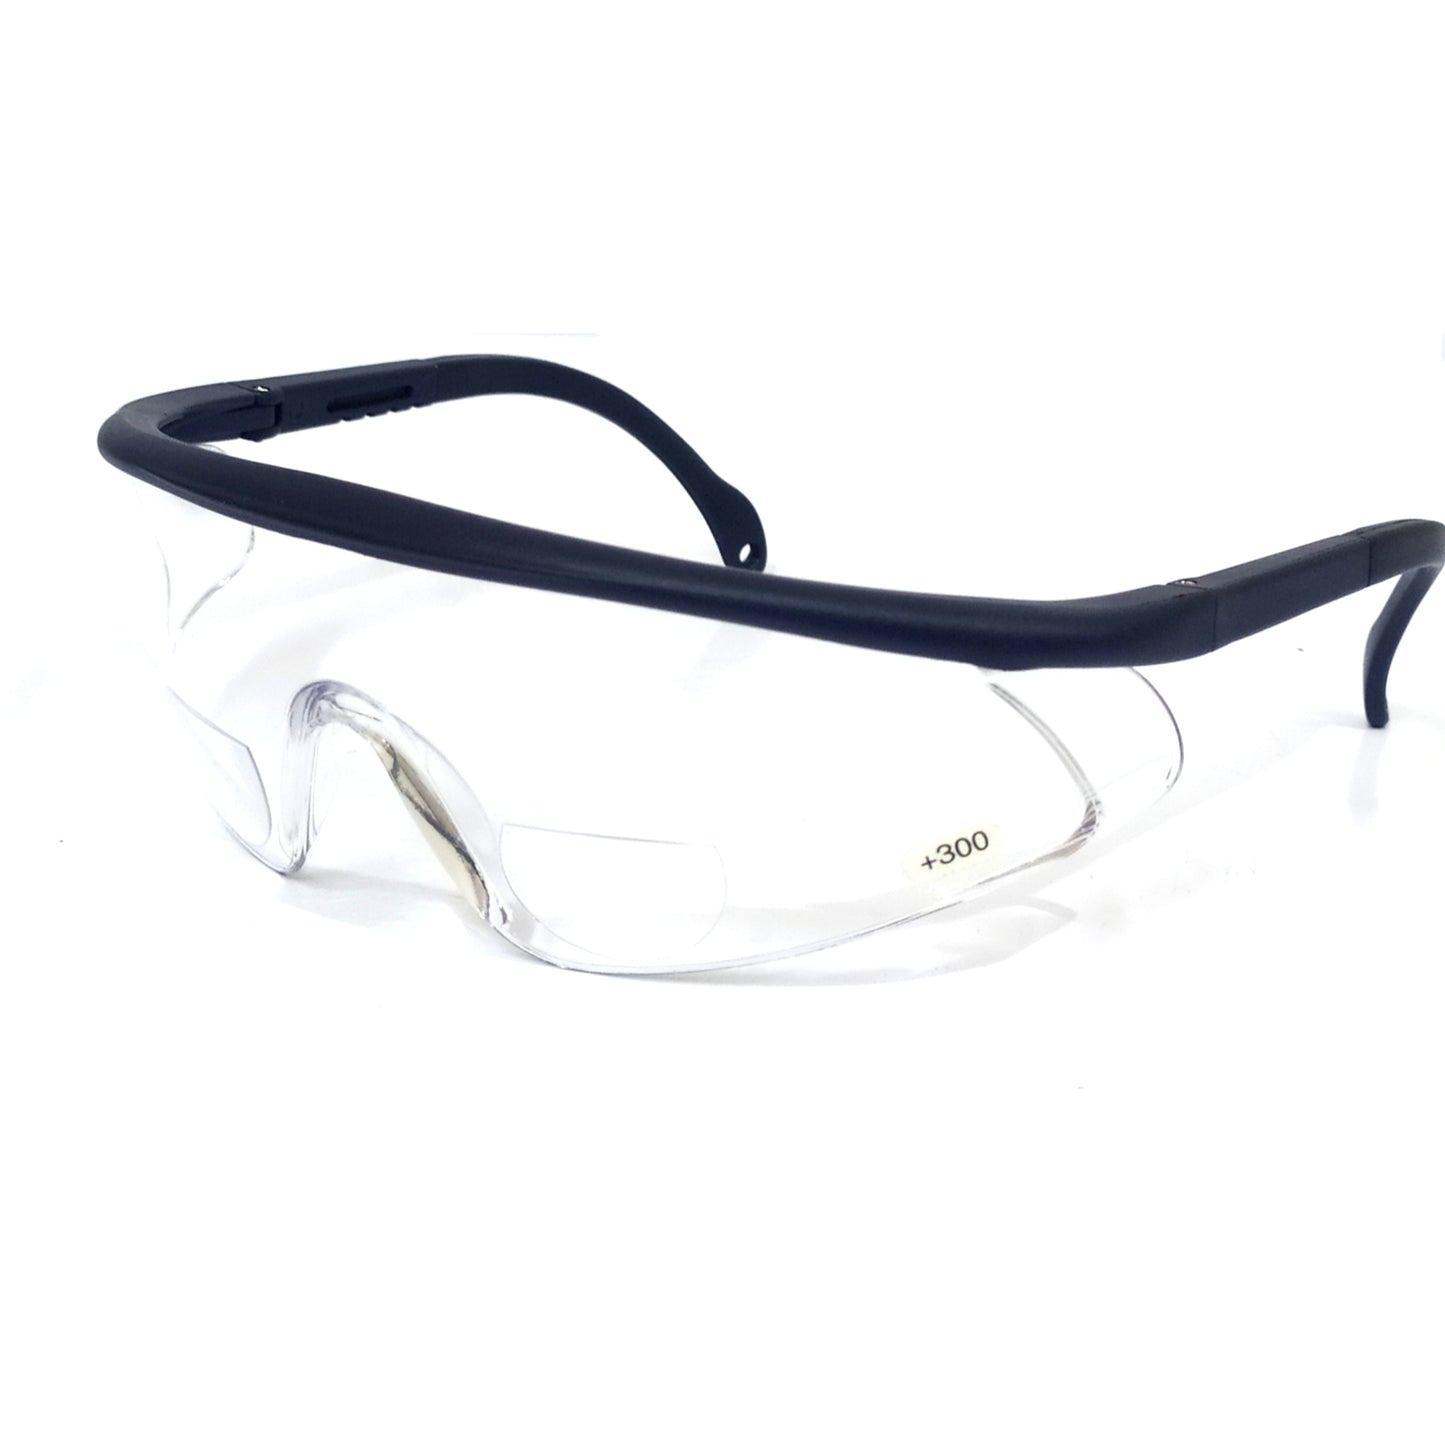 Bifocal Safety Glasses Clear +3.0 Bifocal Lens with Black Frame